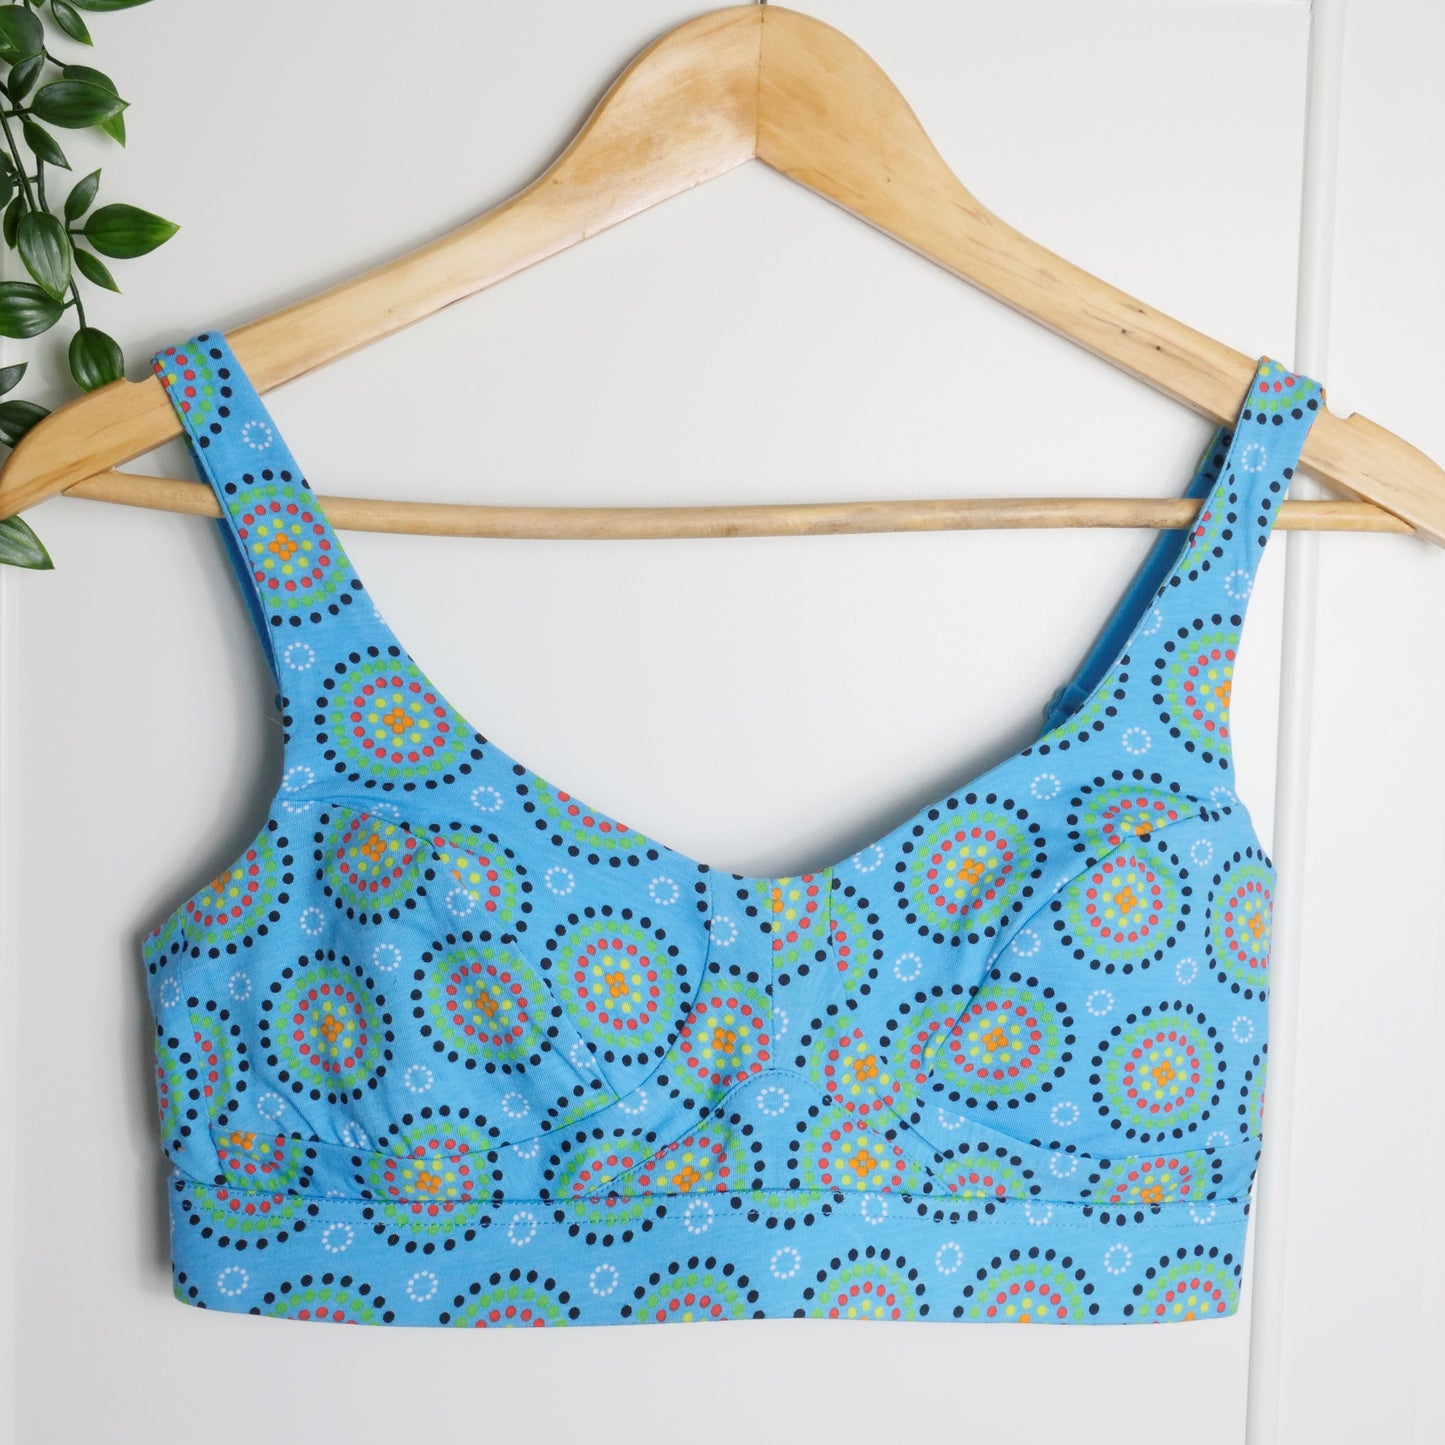 Women's organic cotton bra in blue Mara print - more supportive style